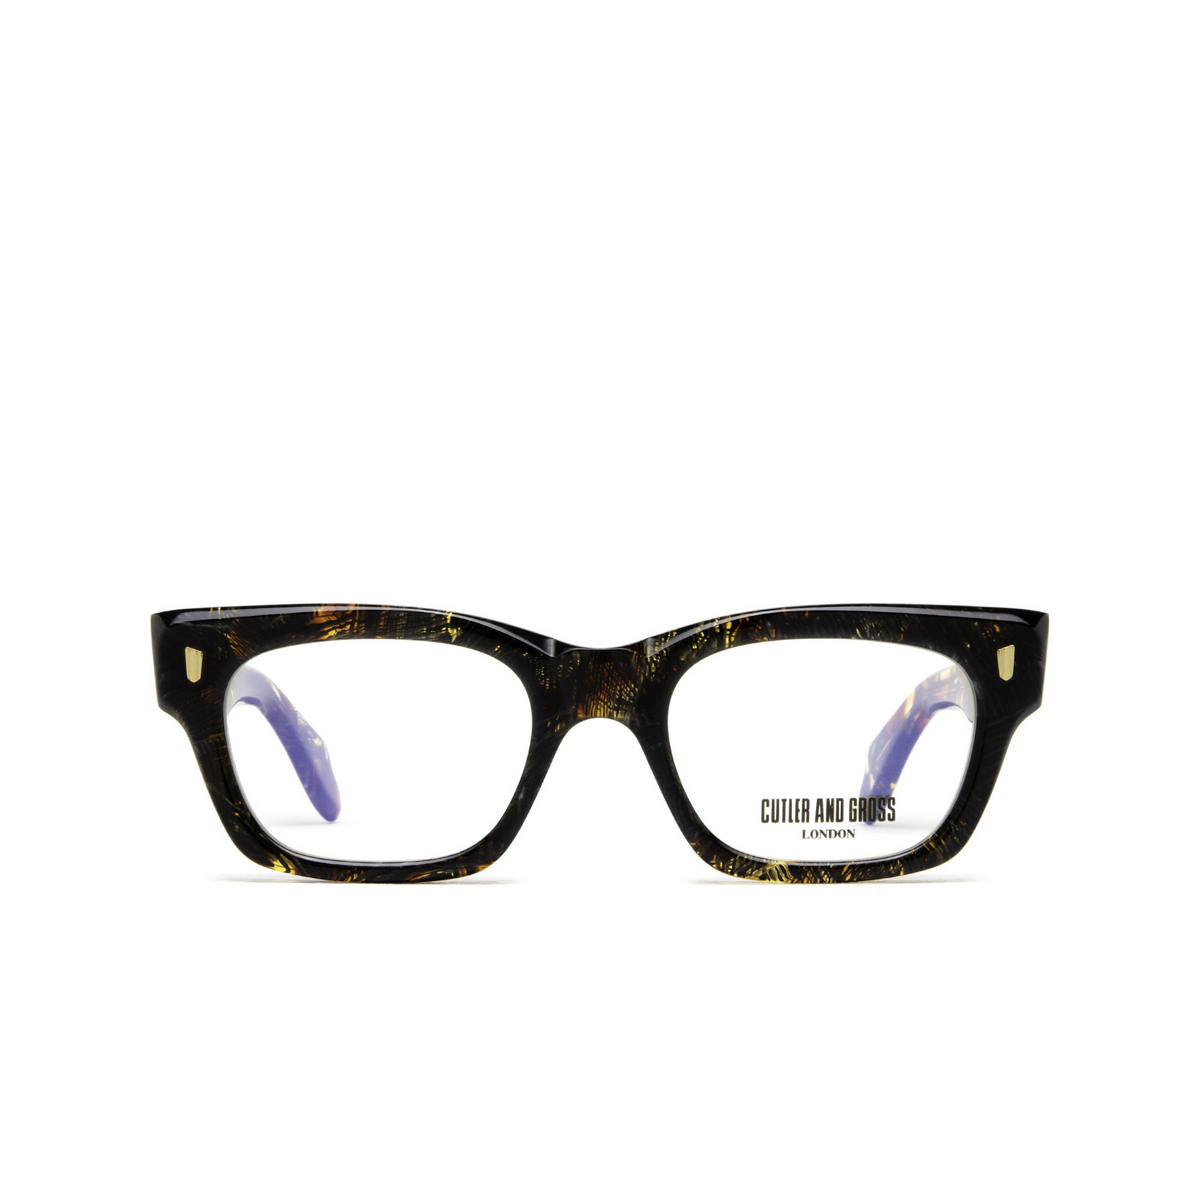 Cutler and Gross 1391 Eyeglasses 02 Brush Stroke - front view